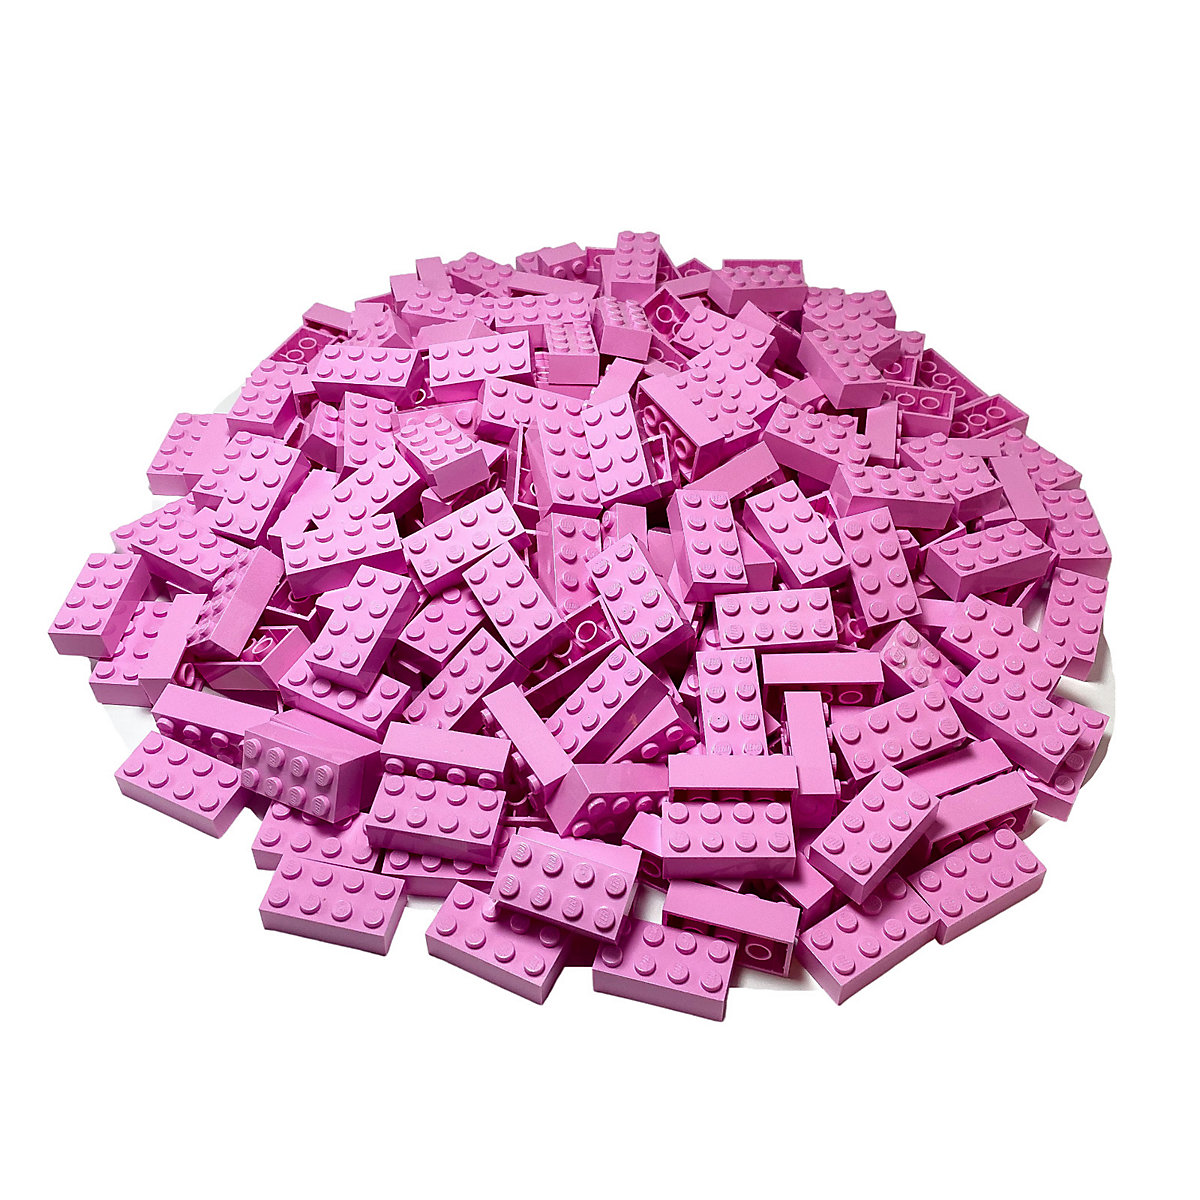 LEGO® 2x4 Steine Rosa Classic Basic City Pink brick 3001 NEU! Menge 250x